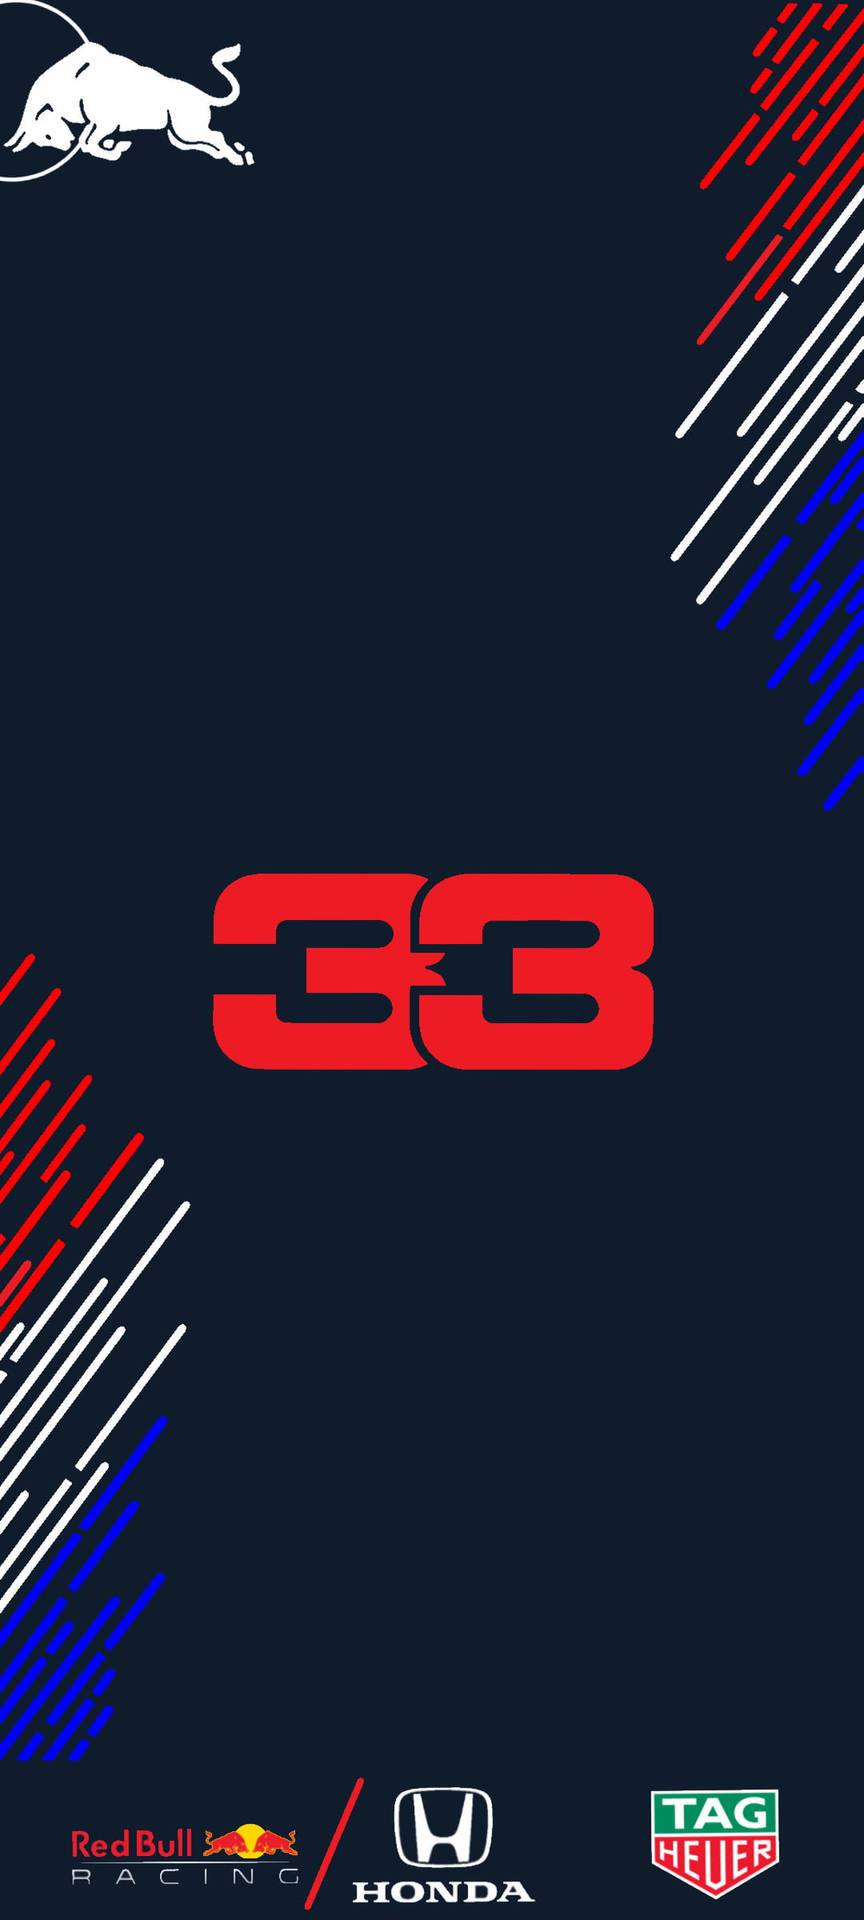 Max Verstappen 33 | Backpack